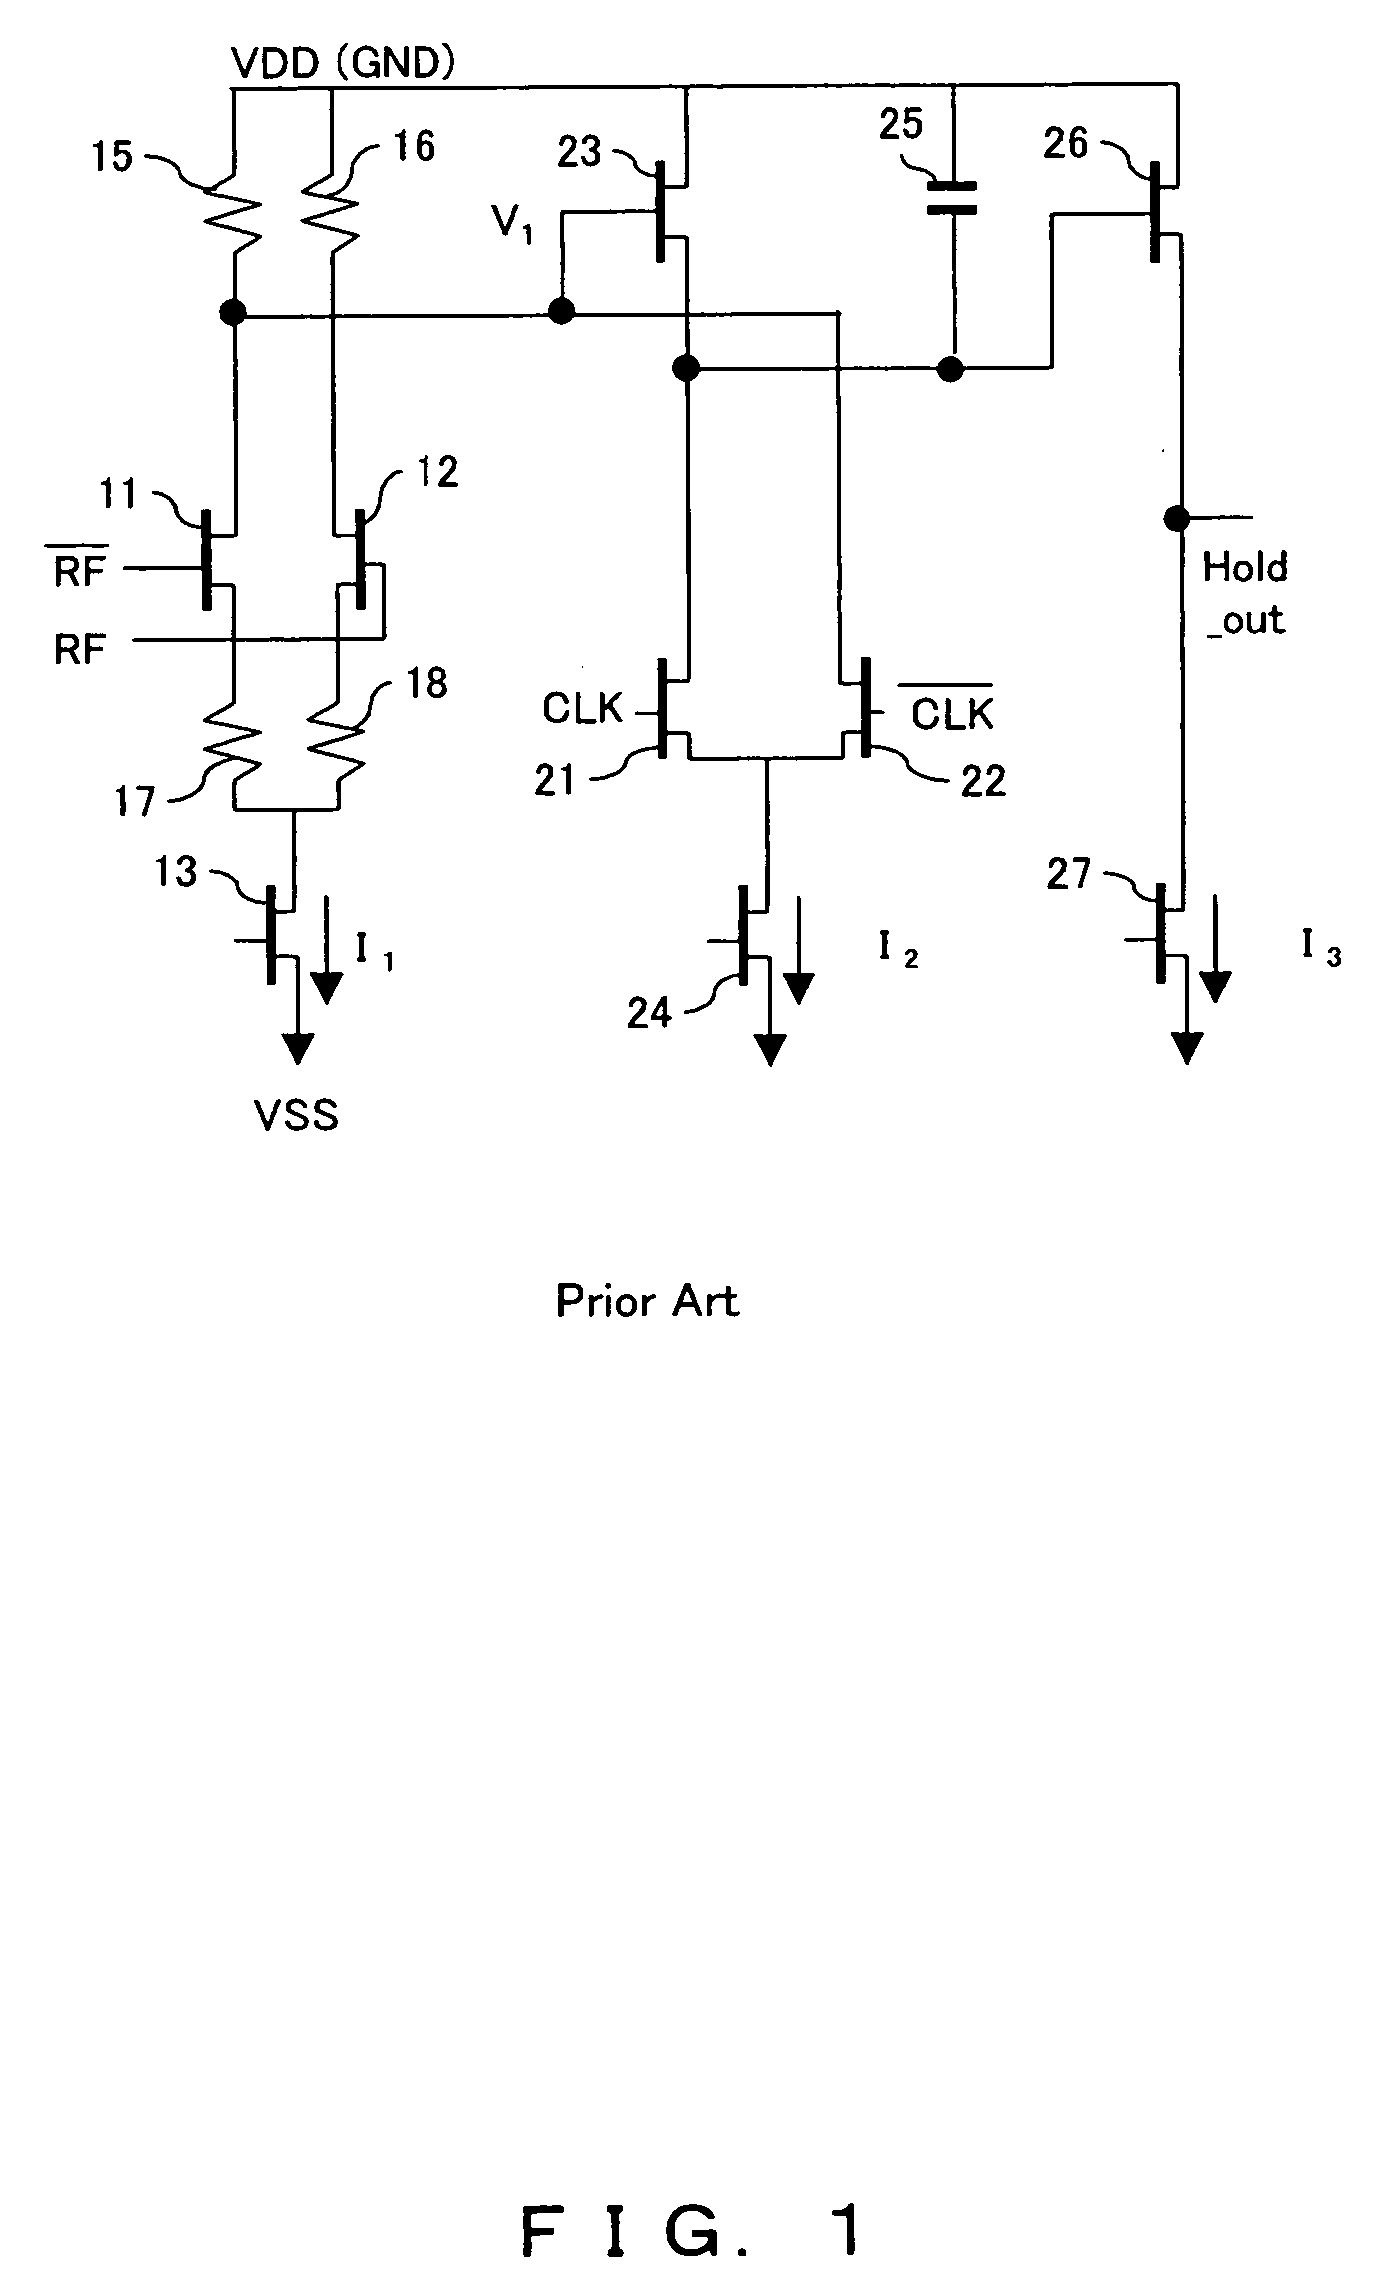 Sample-hold circuit